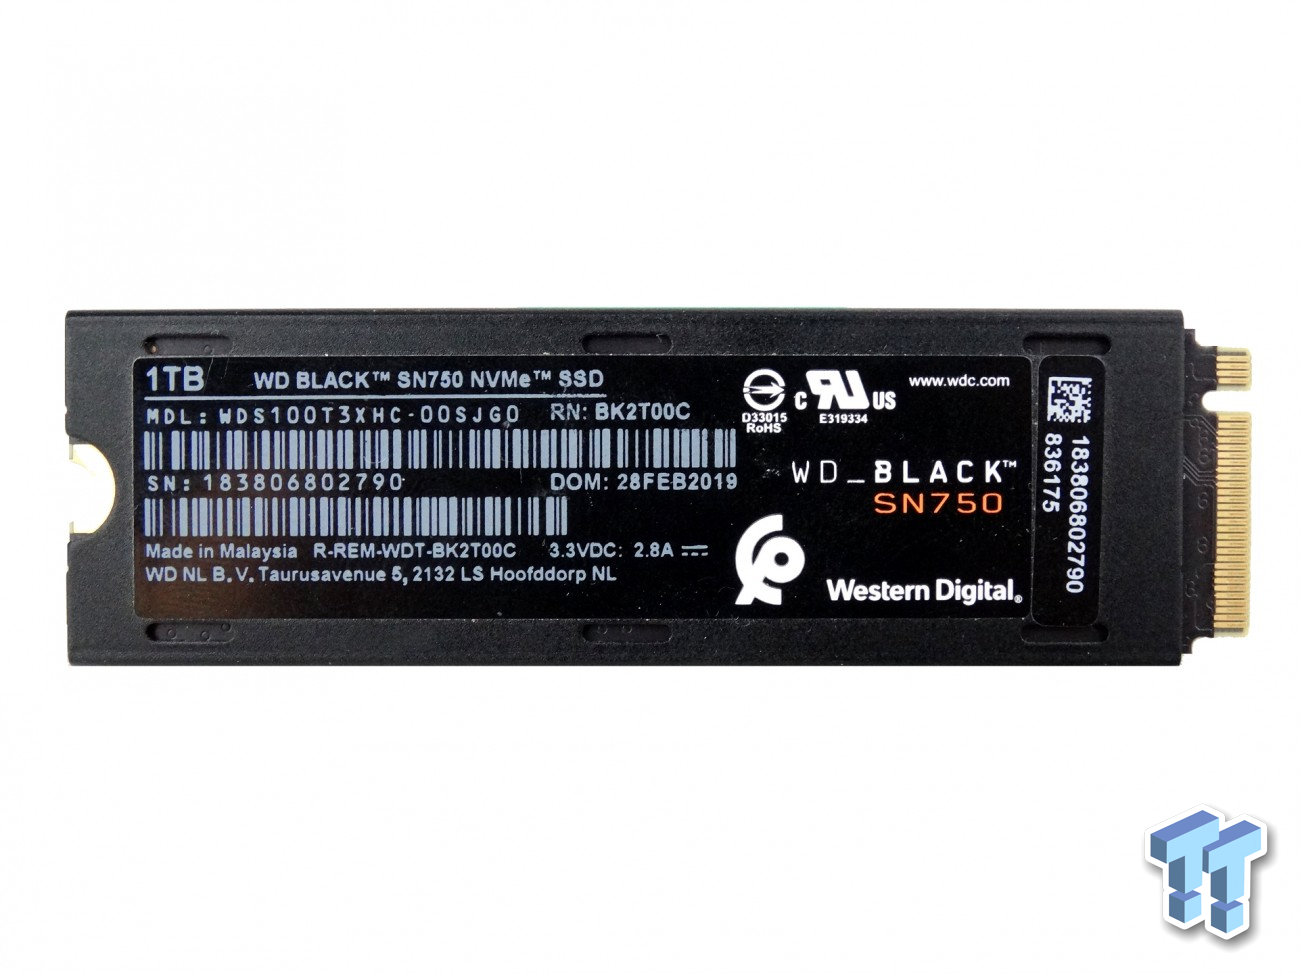 Western Digital Black SN750 with Heatsink SSD Review